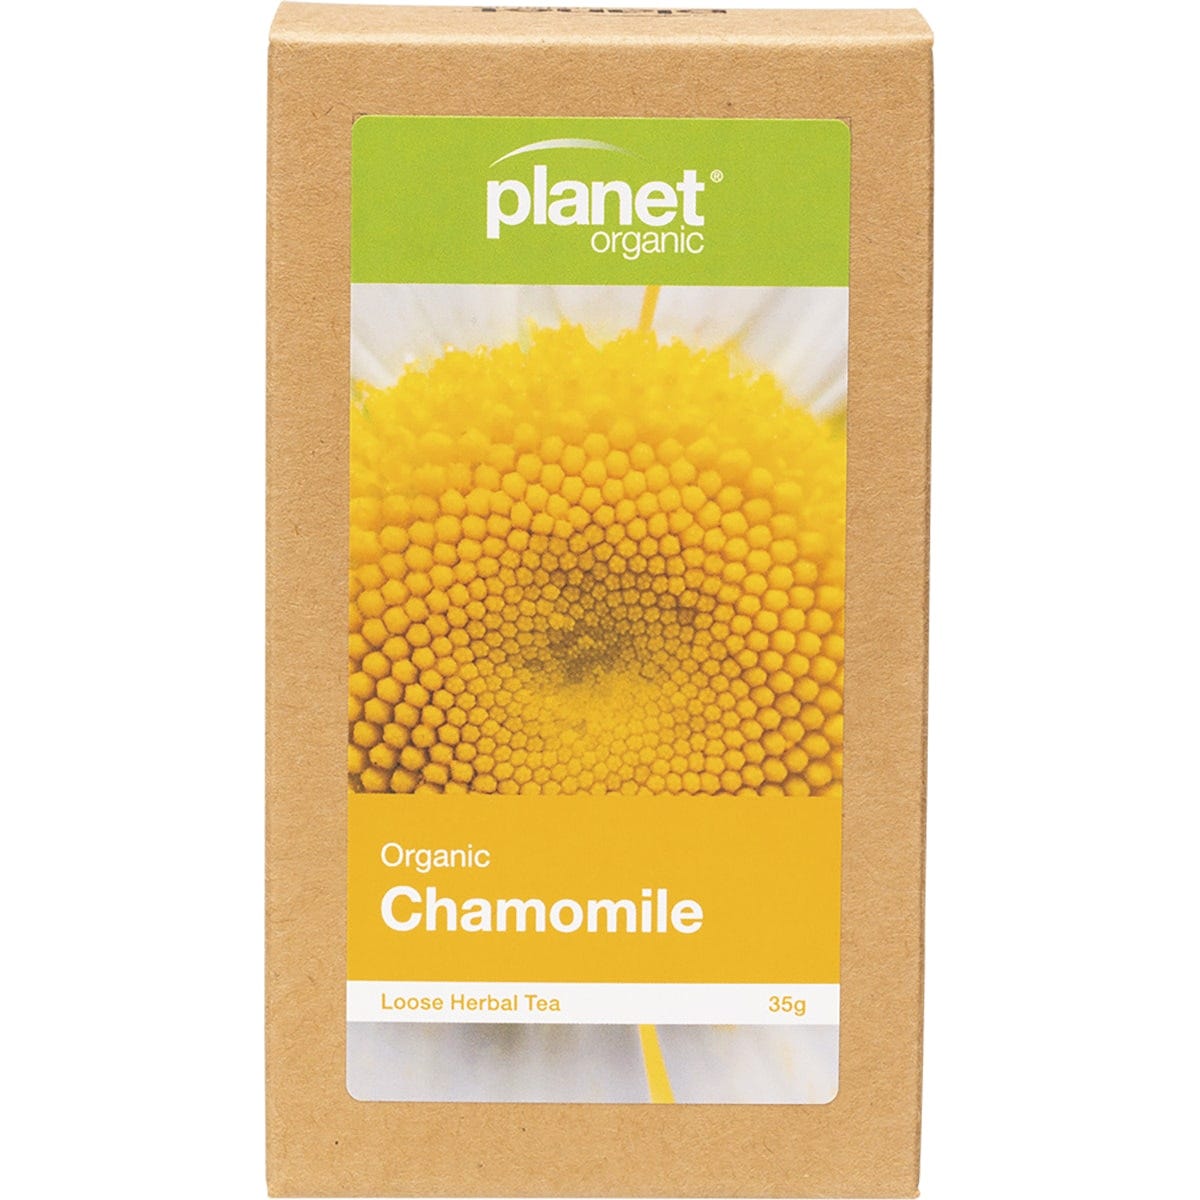 Planet Organic Herbal Loose Leaf Tea Organic Chamomile 35g - Dr Earth - Drinks